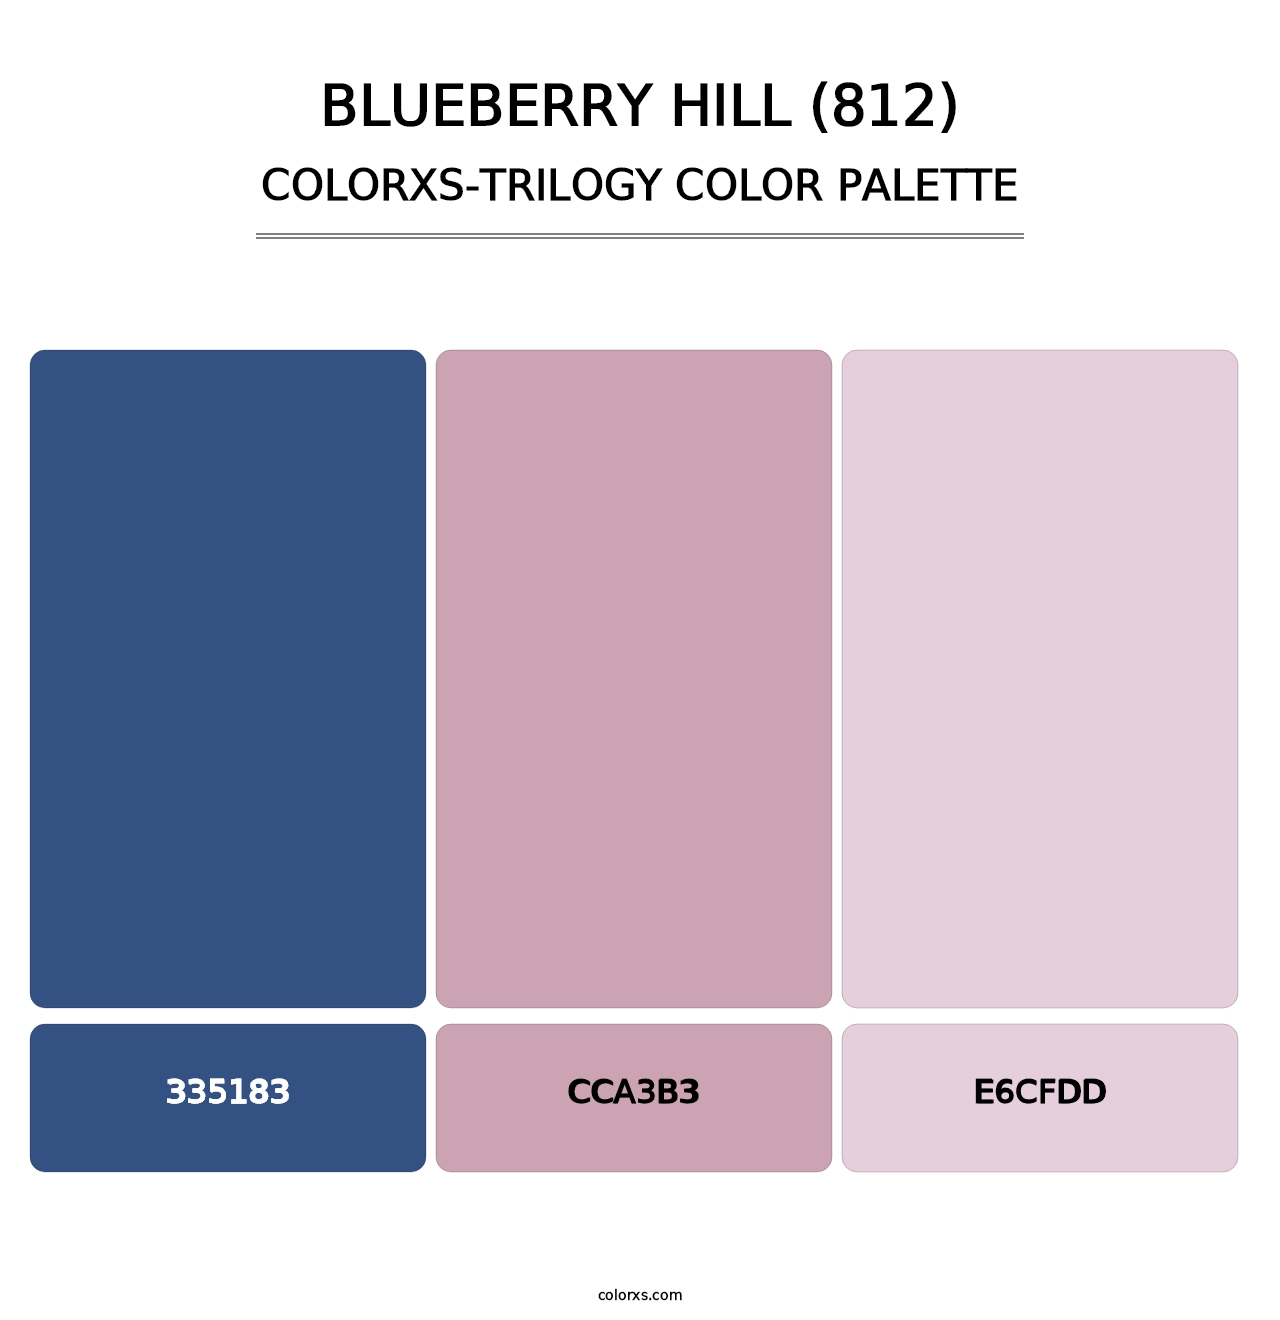 Blueberry Hill (812) - Colorxs Trilogy Palette